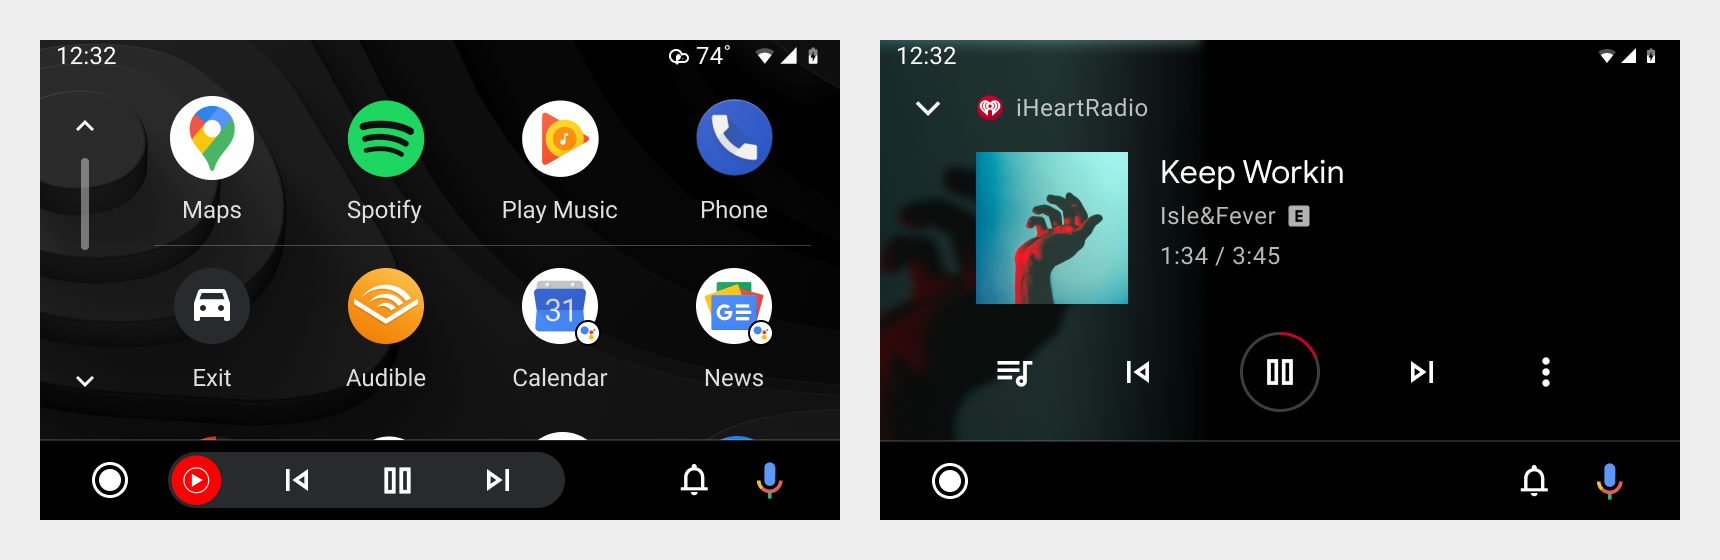 Screenshots of app launcher and iHeartRadio media playback screen